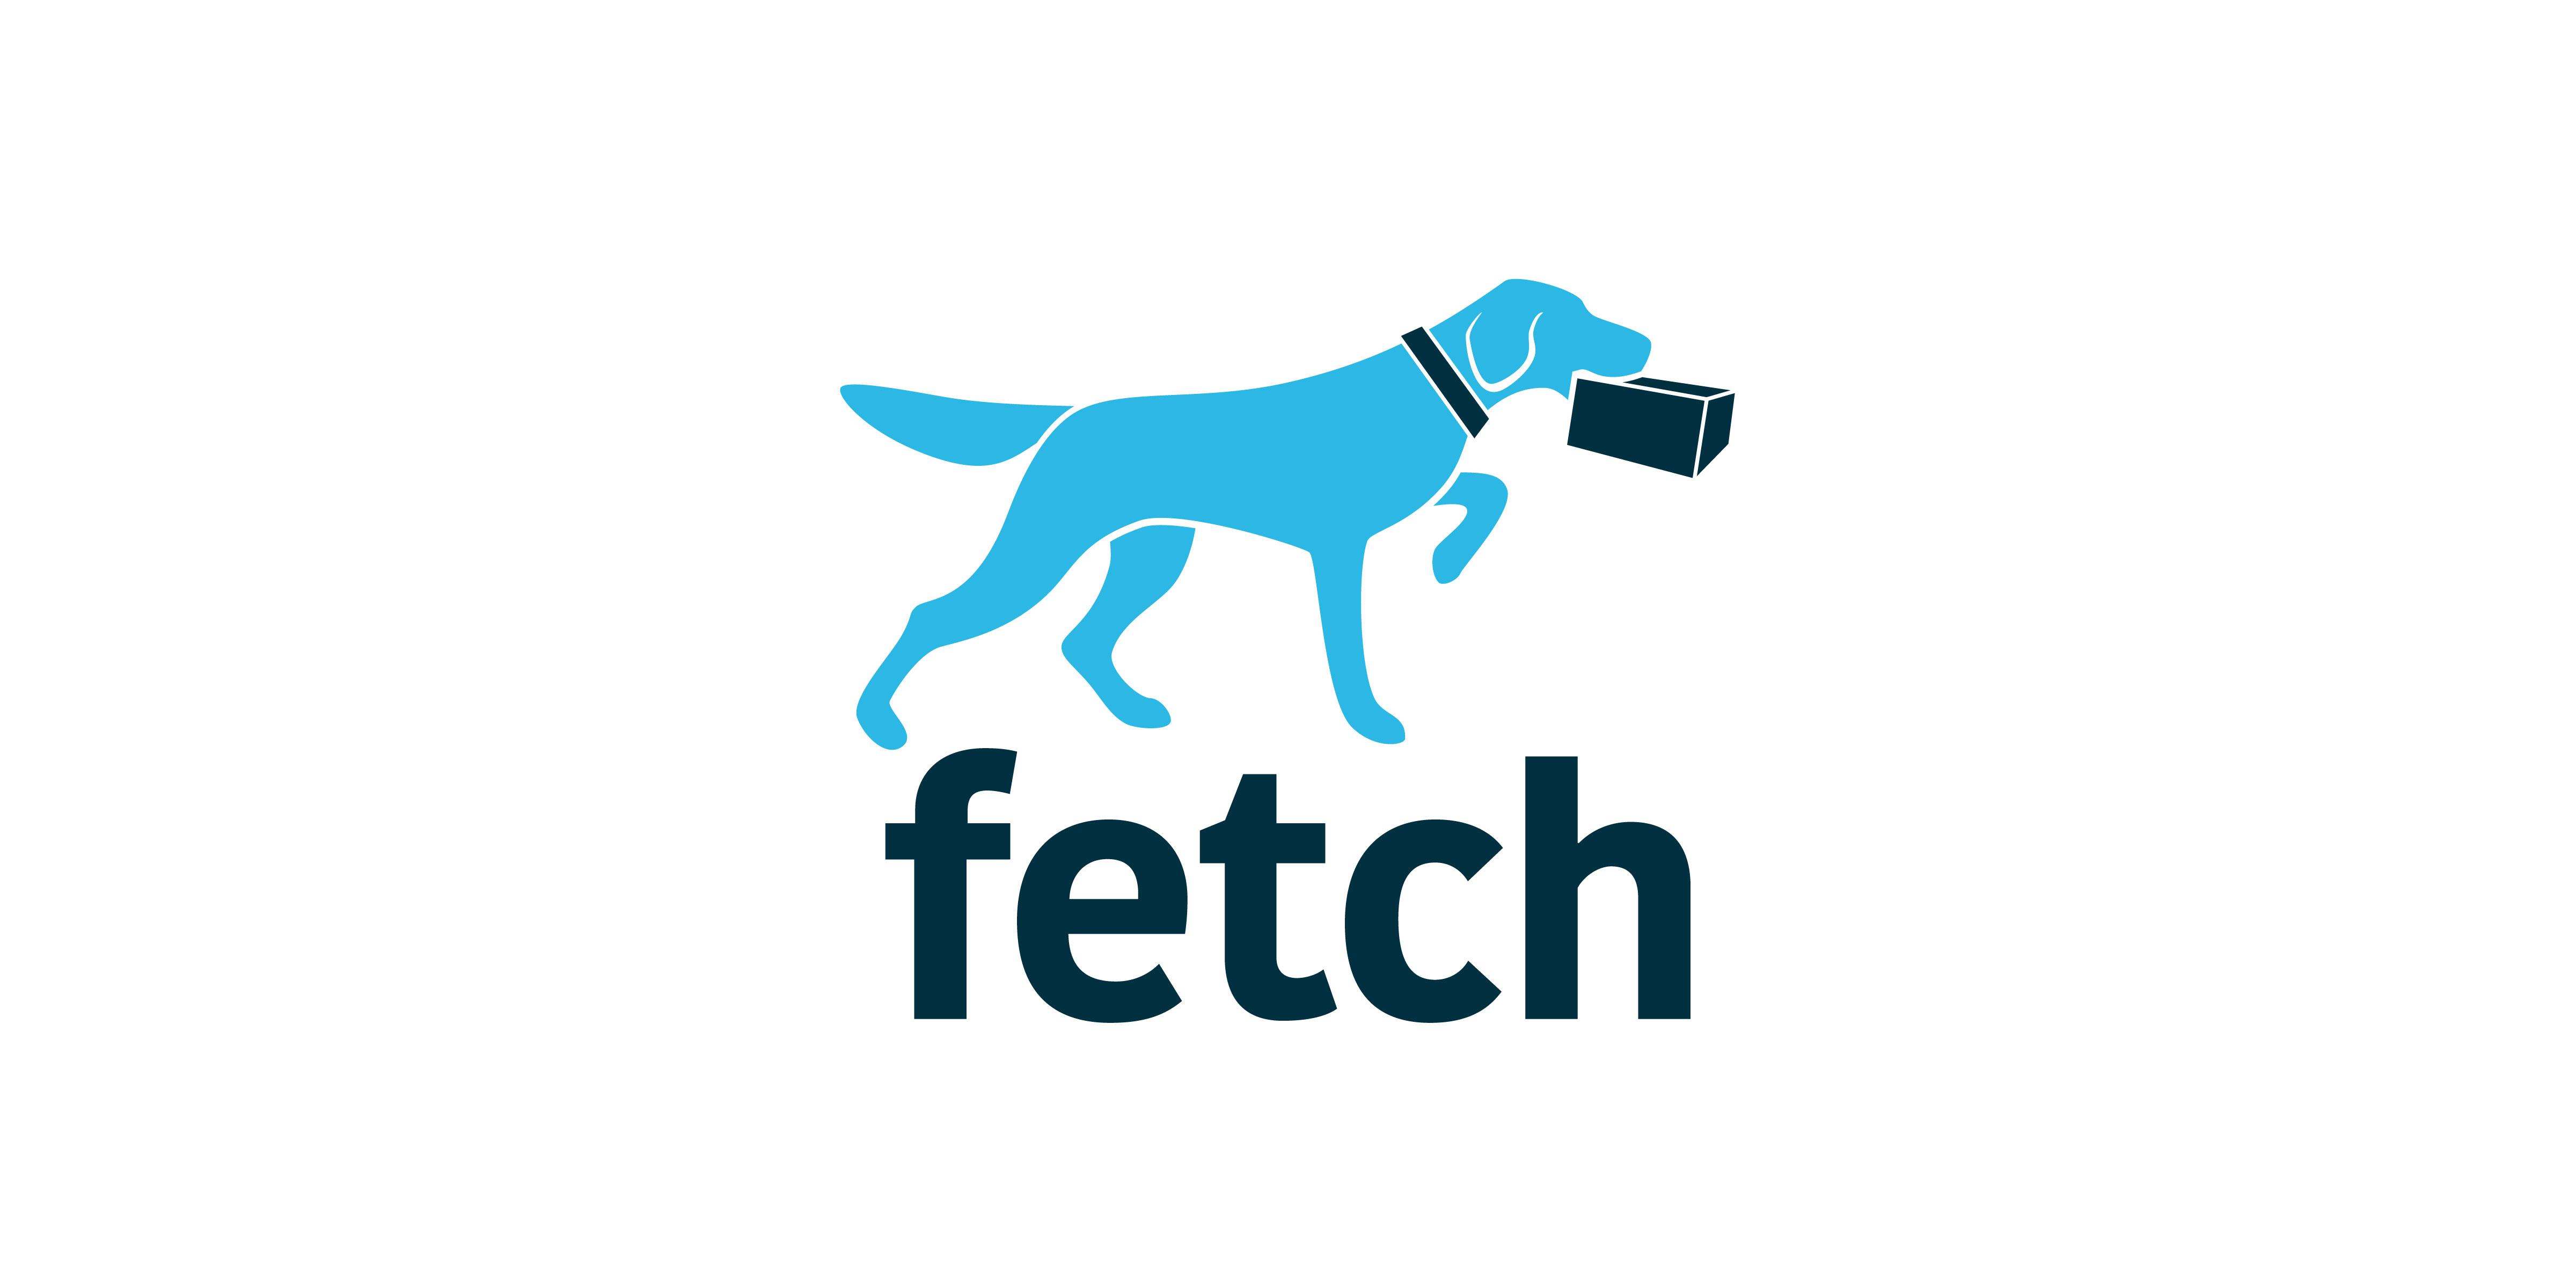 Fetch. To fetch. Fetch фото. Fetch deliver. Import fetch